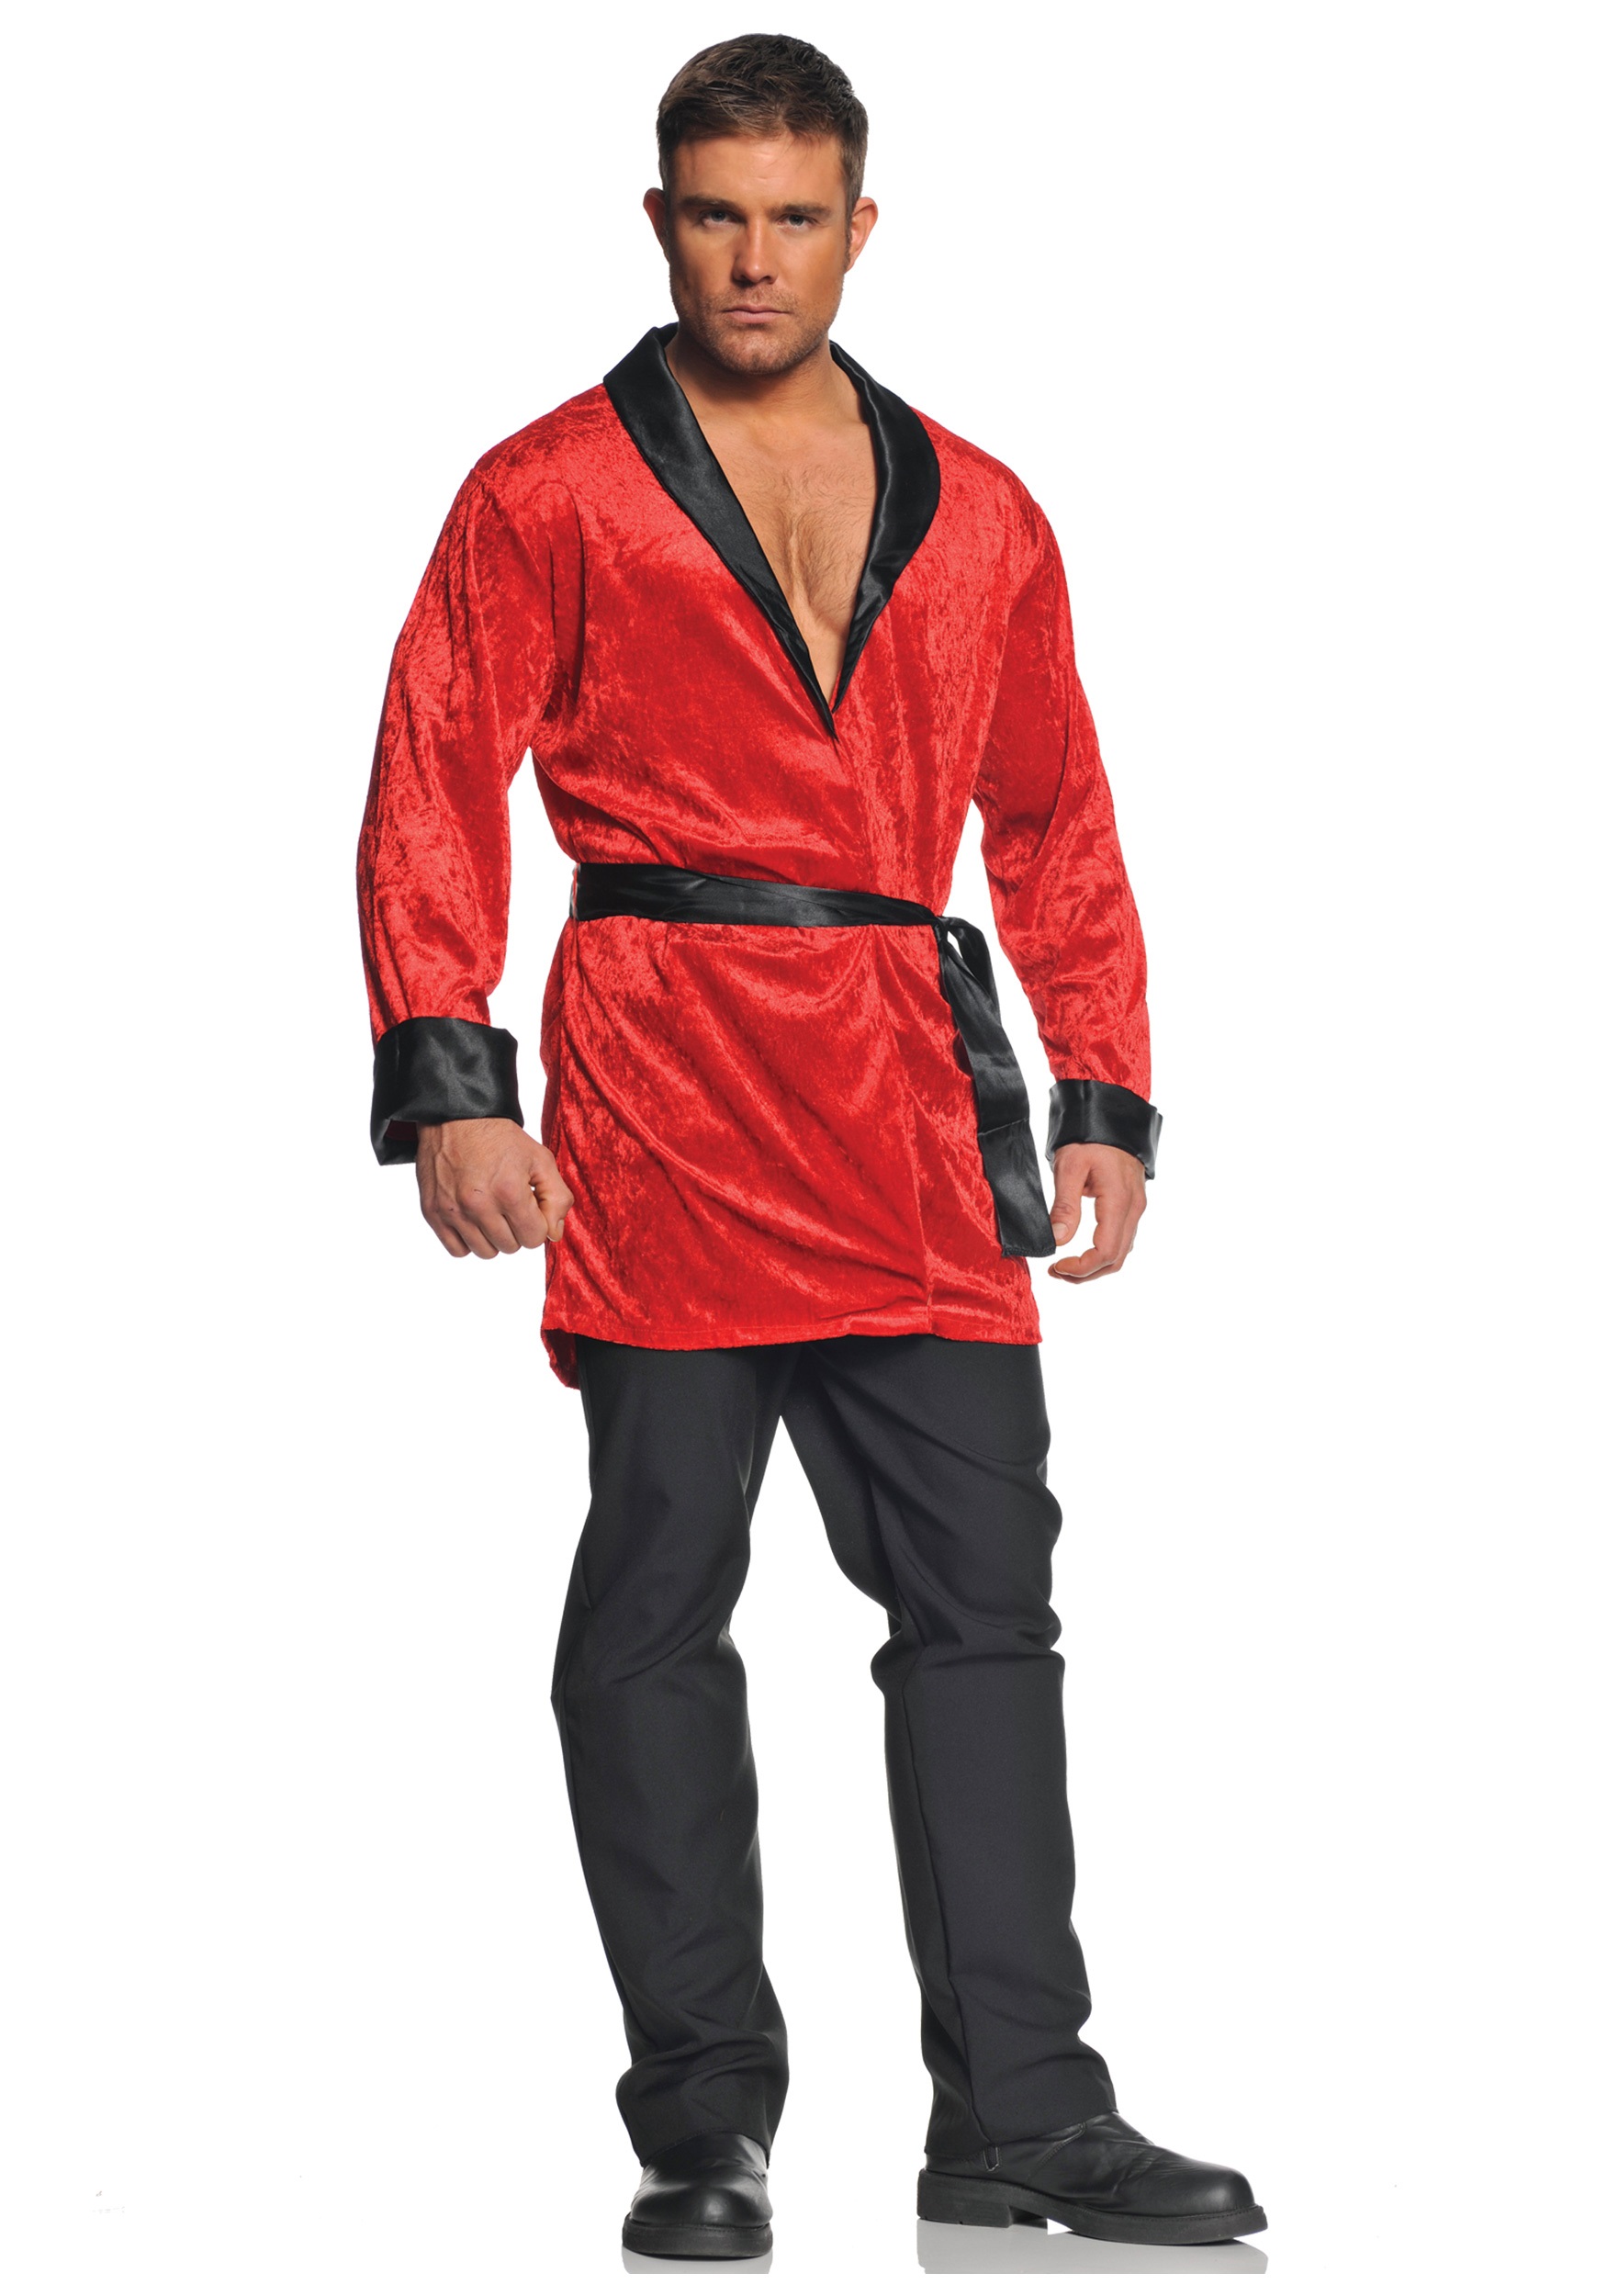 Red Smoking Jacket Costume For Men , Playboy Mens Costume , Hustle Jacket